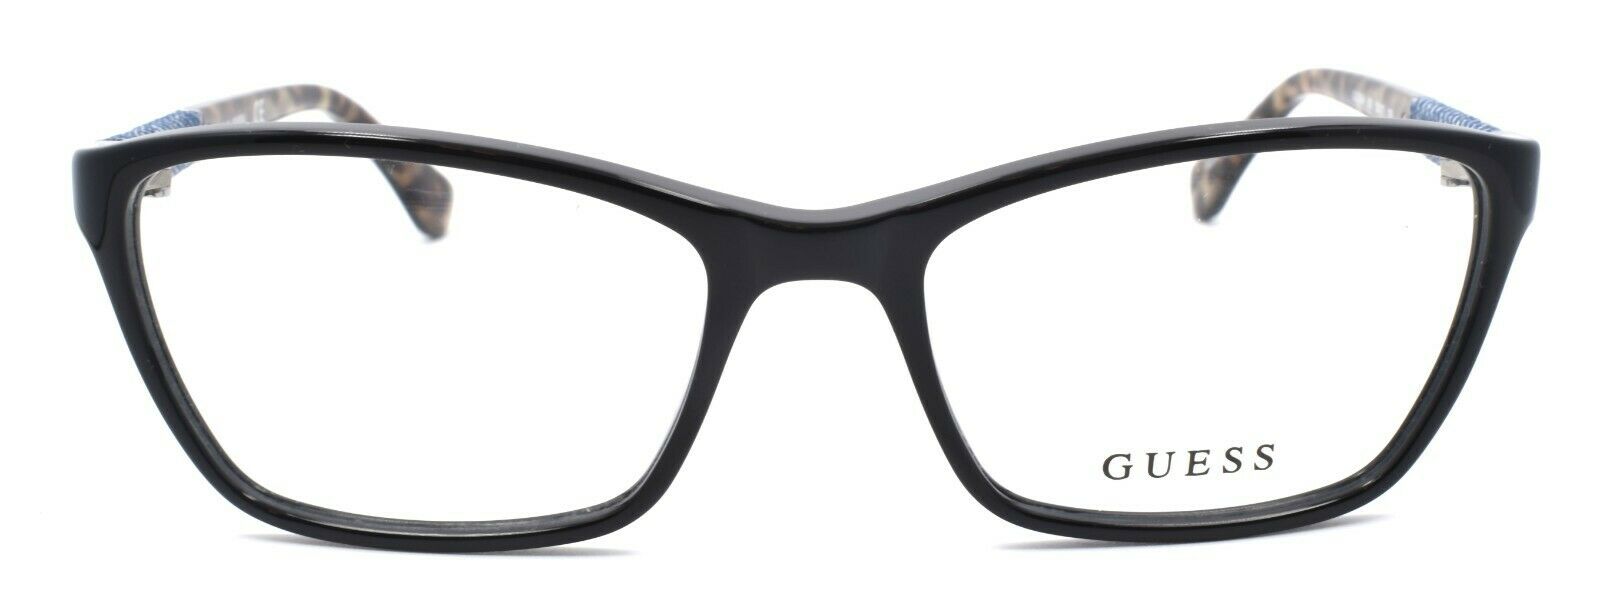 2-GUESS GU2594 001 Women's Eyeglasses Frames 52-17-135 Black / Denim + CASE-664689837199-IKSpecs